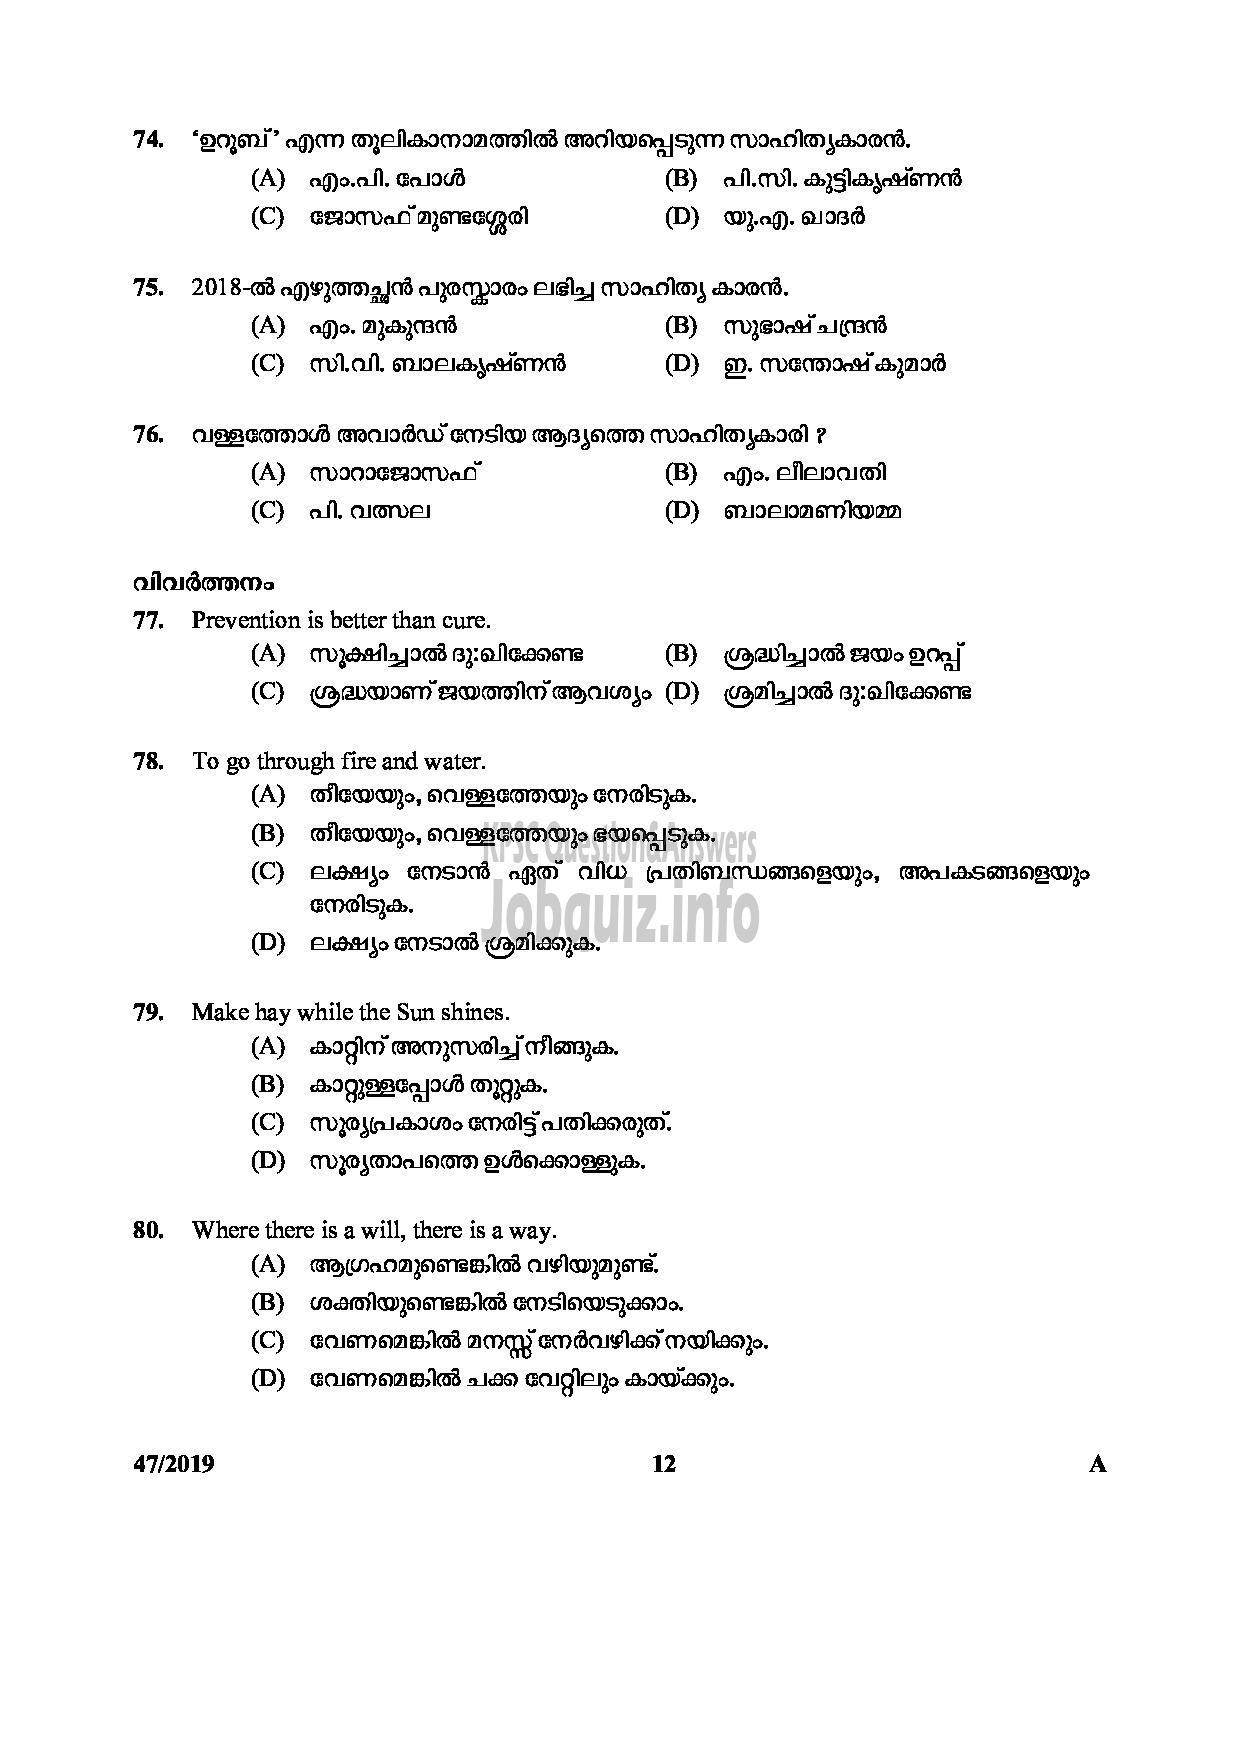 Kerala PSC Question Paper - LDC (TAMIL & MALAYALAM KNOWING) VARIOUS DEPARTMENTS English / Malayalam / Tamil-12